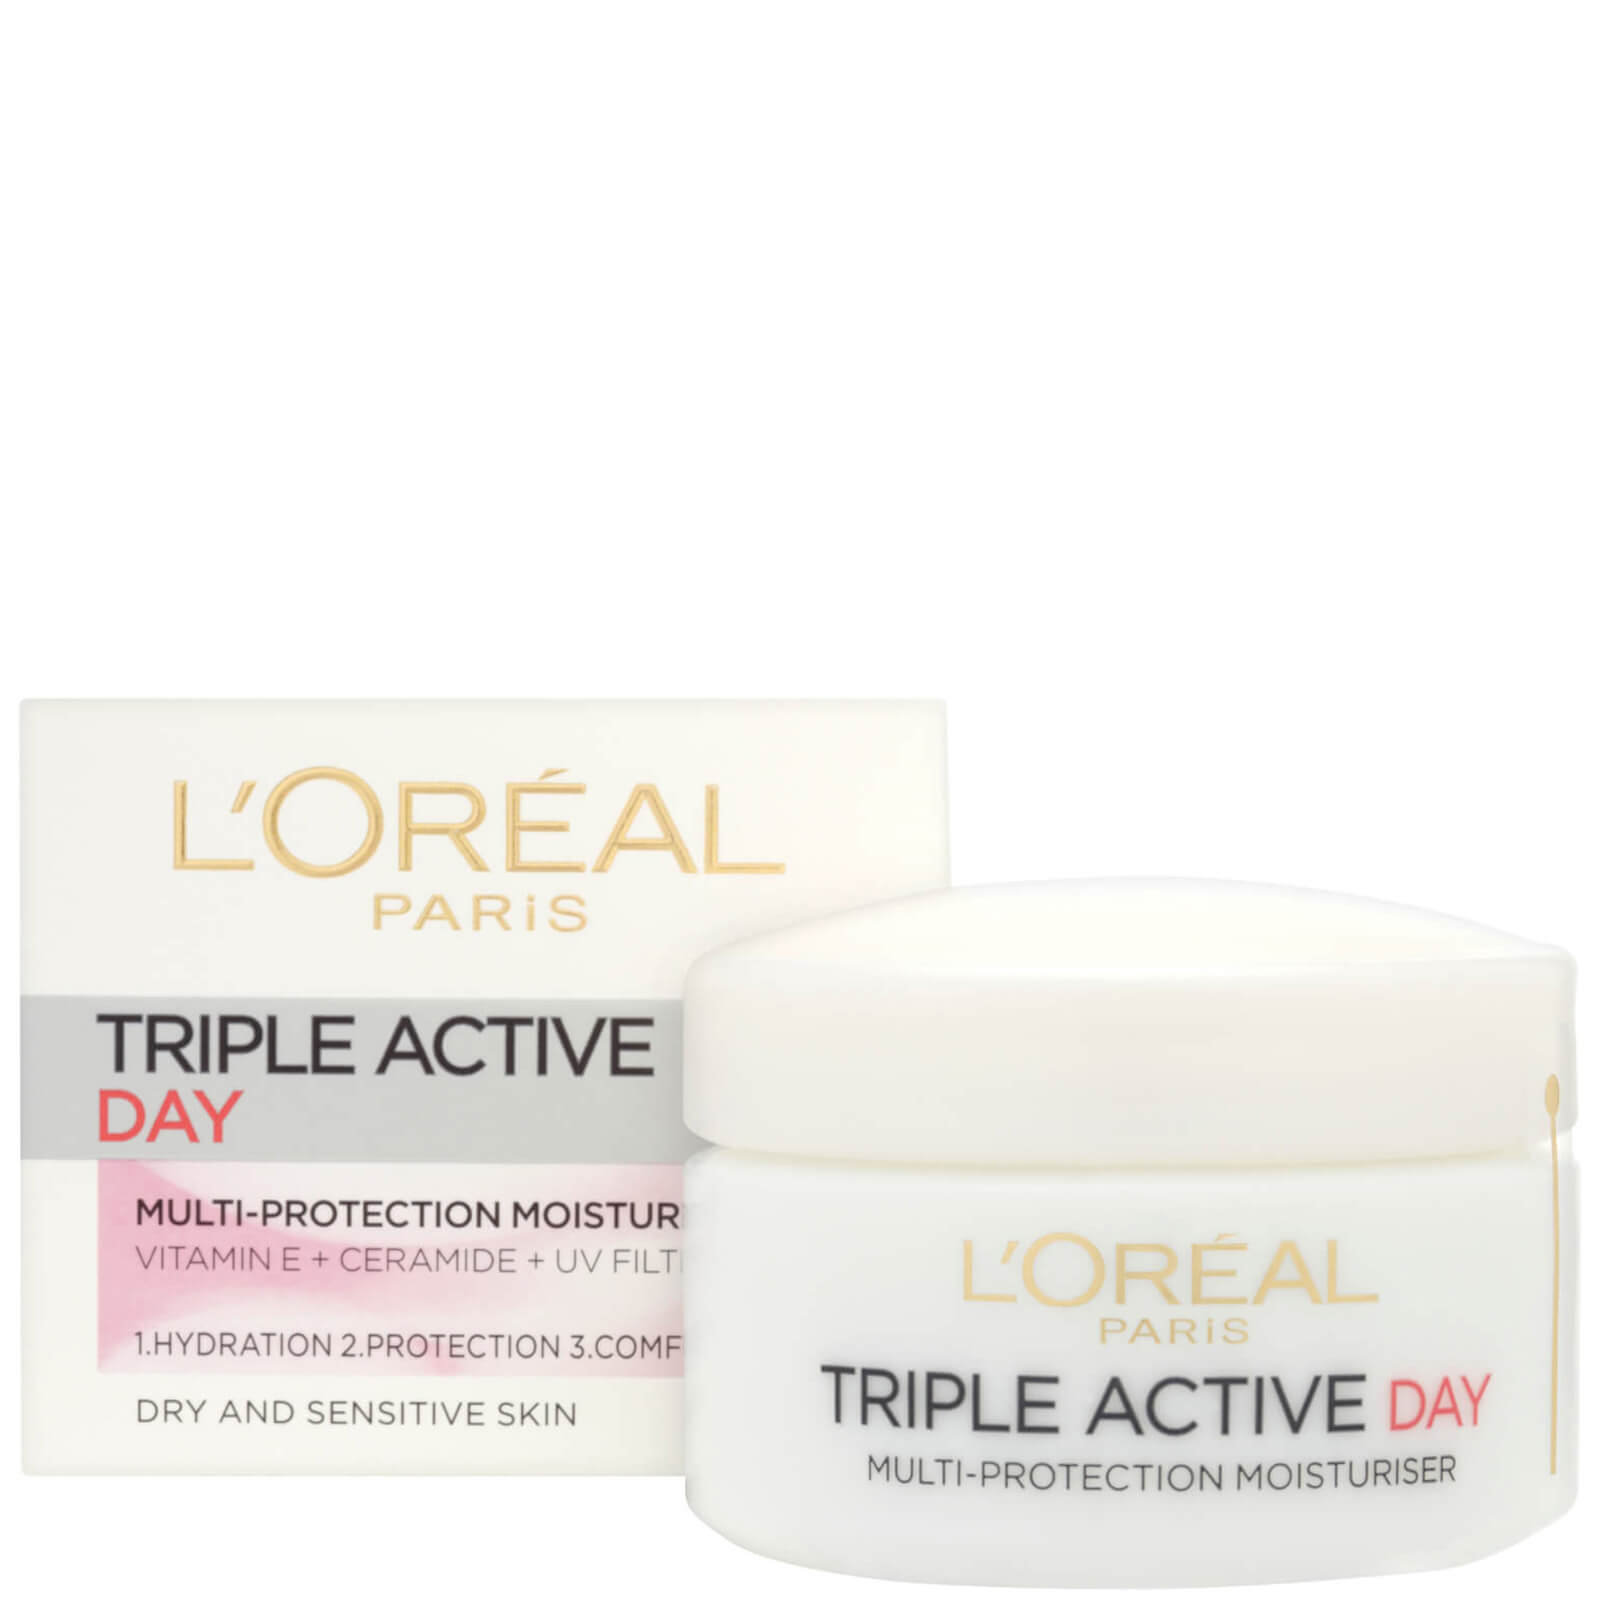 L'Oreal Paris Dermo Expertise Triple Active Day Multi-Protection Moisturiser - Dry / Sensitive Skin 